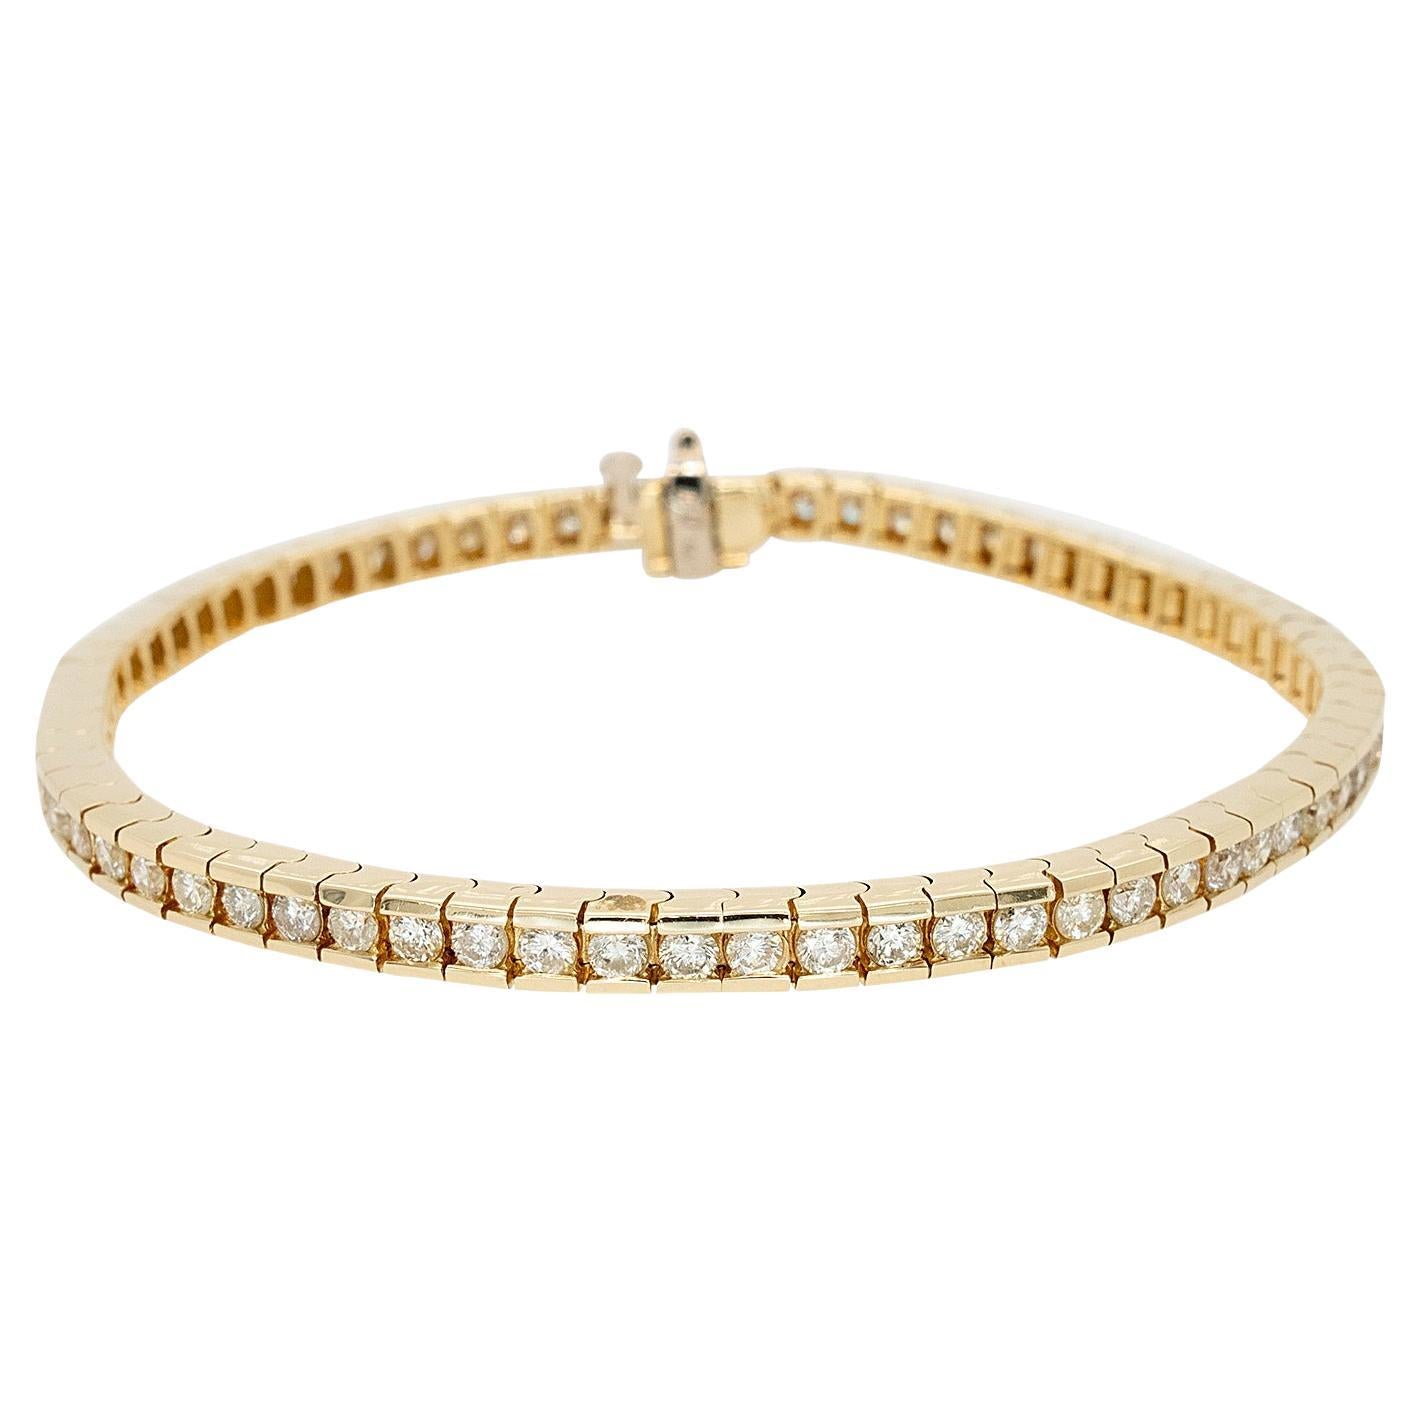 Bracelet tennis en or jaune 14 carats avec diamants naturels de 4,5 carats